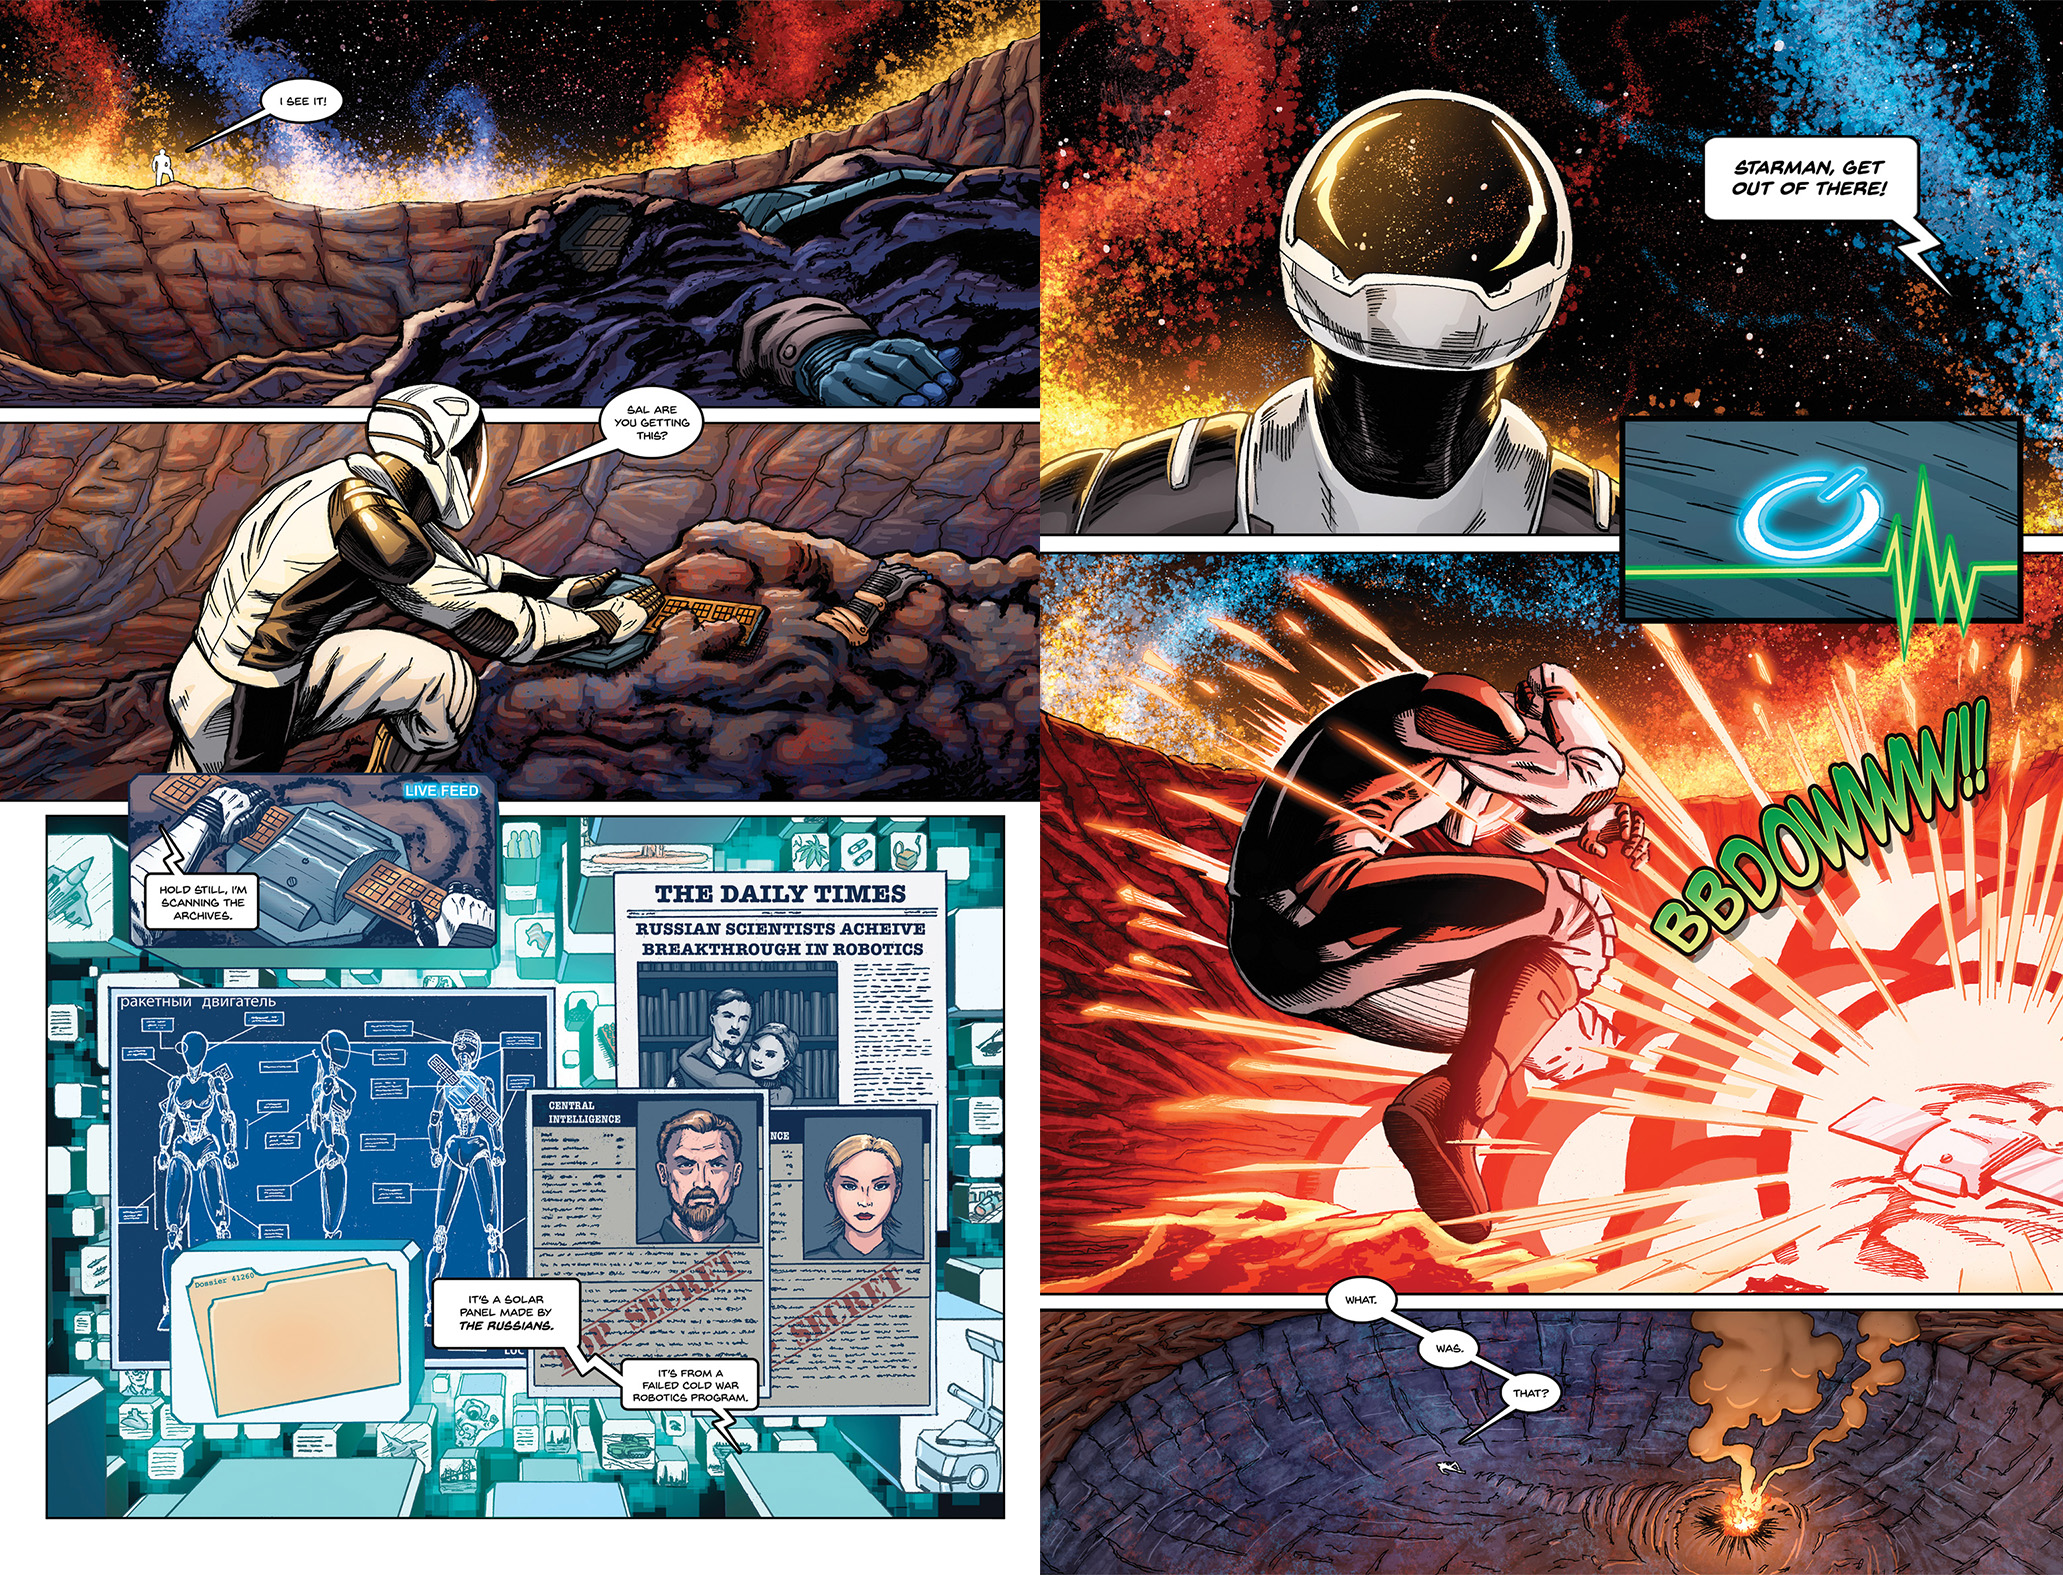 The Adventures of Starman Operation Darkstone Page 9 & 10